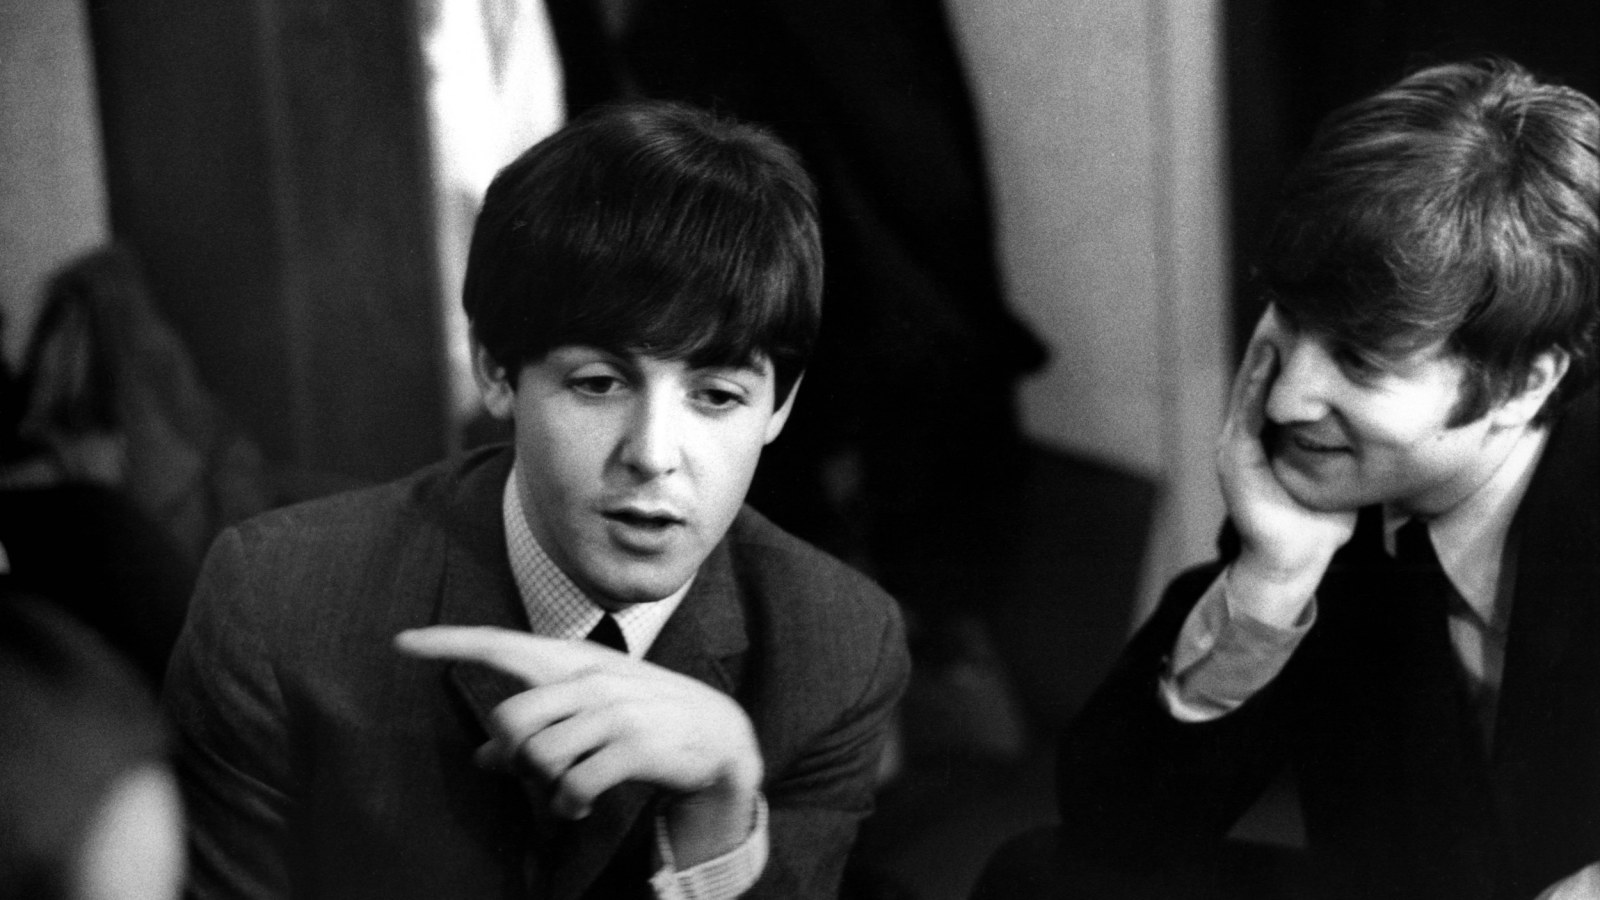 Paul McCartney Honors John Lennon's 80th Birthday With Poignant Photo of  Their Close Beatles Bond